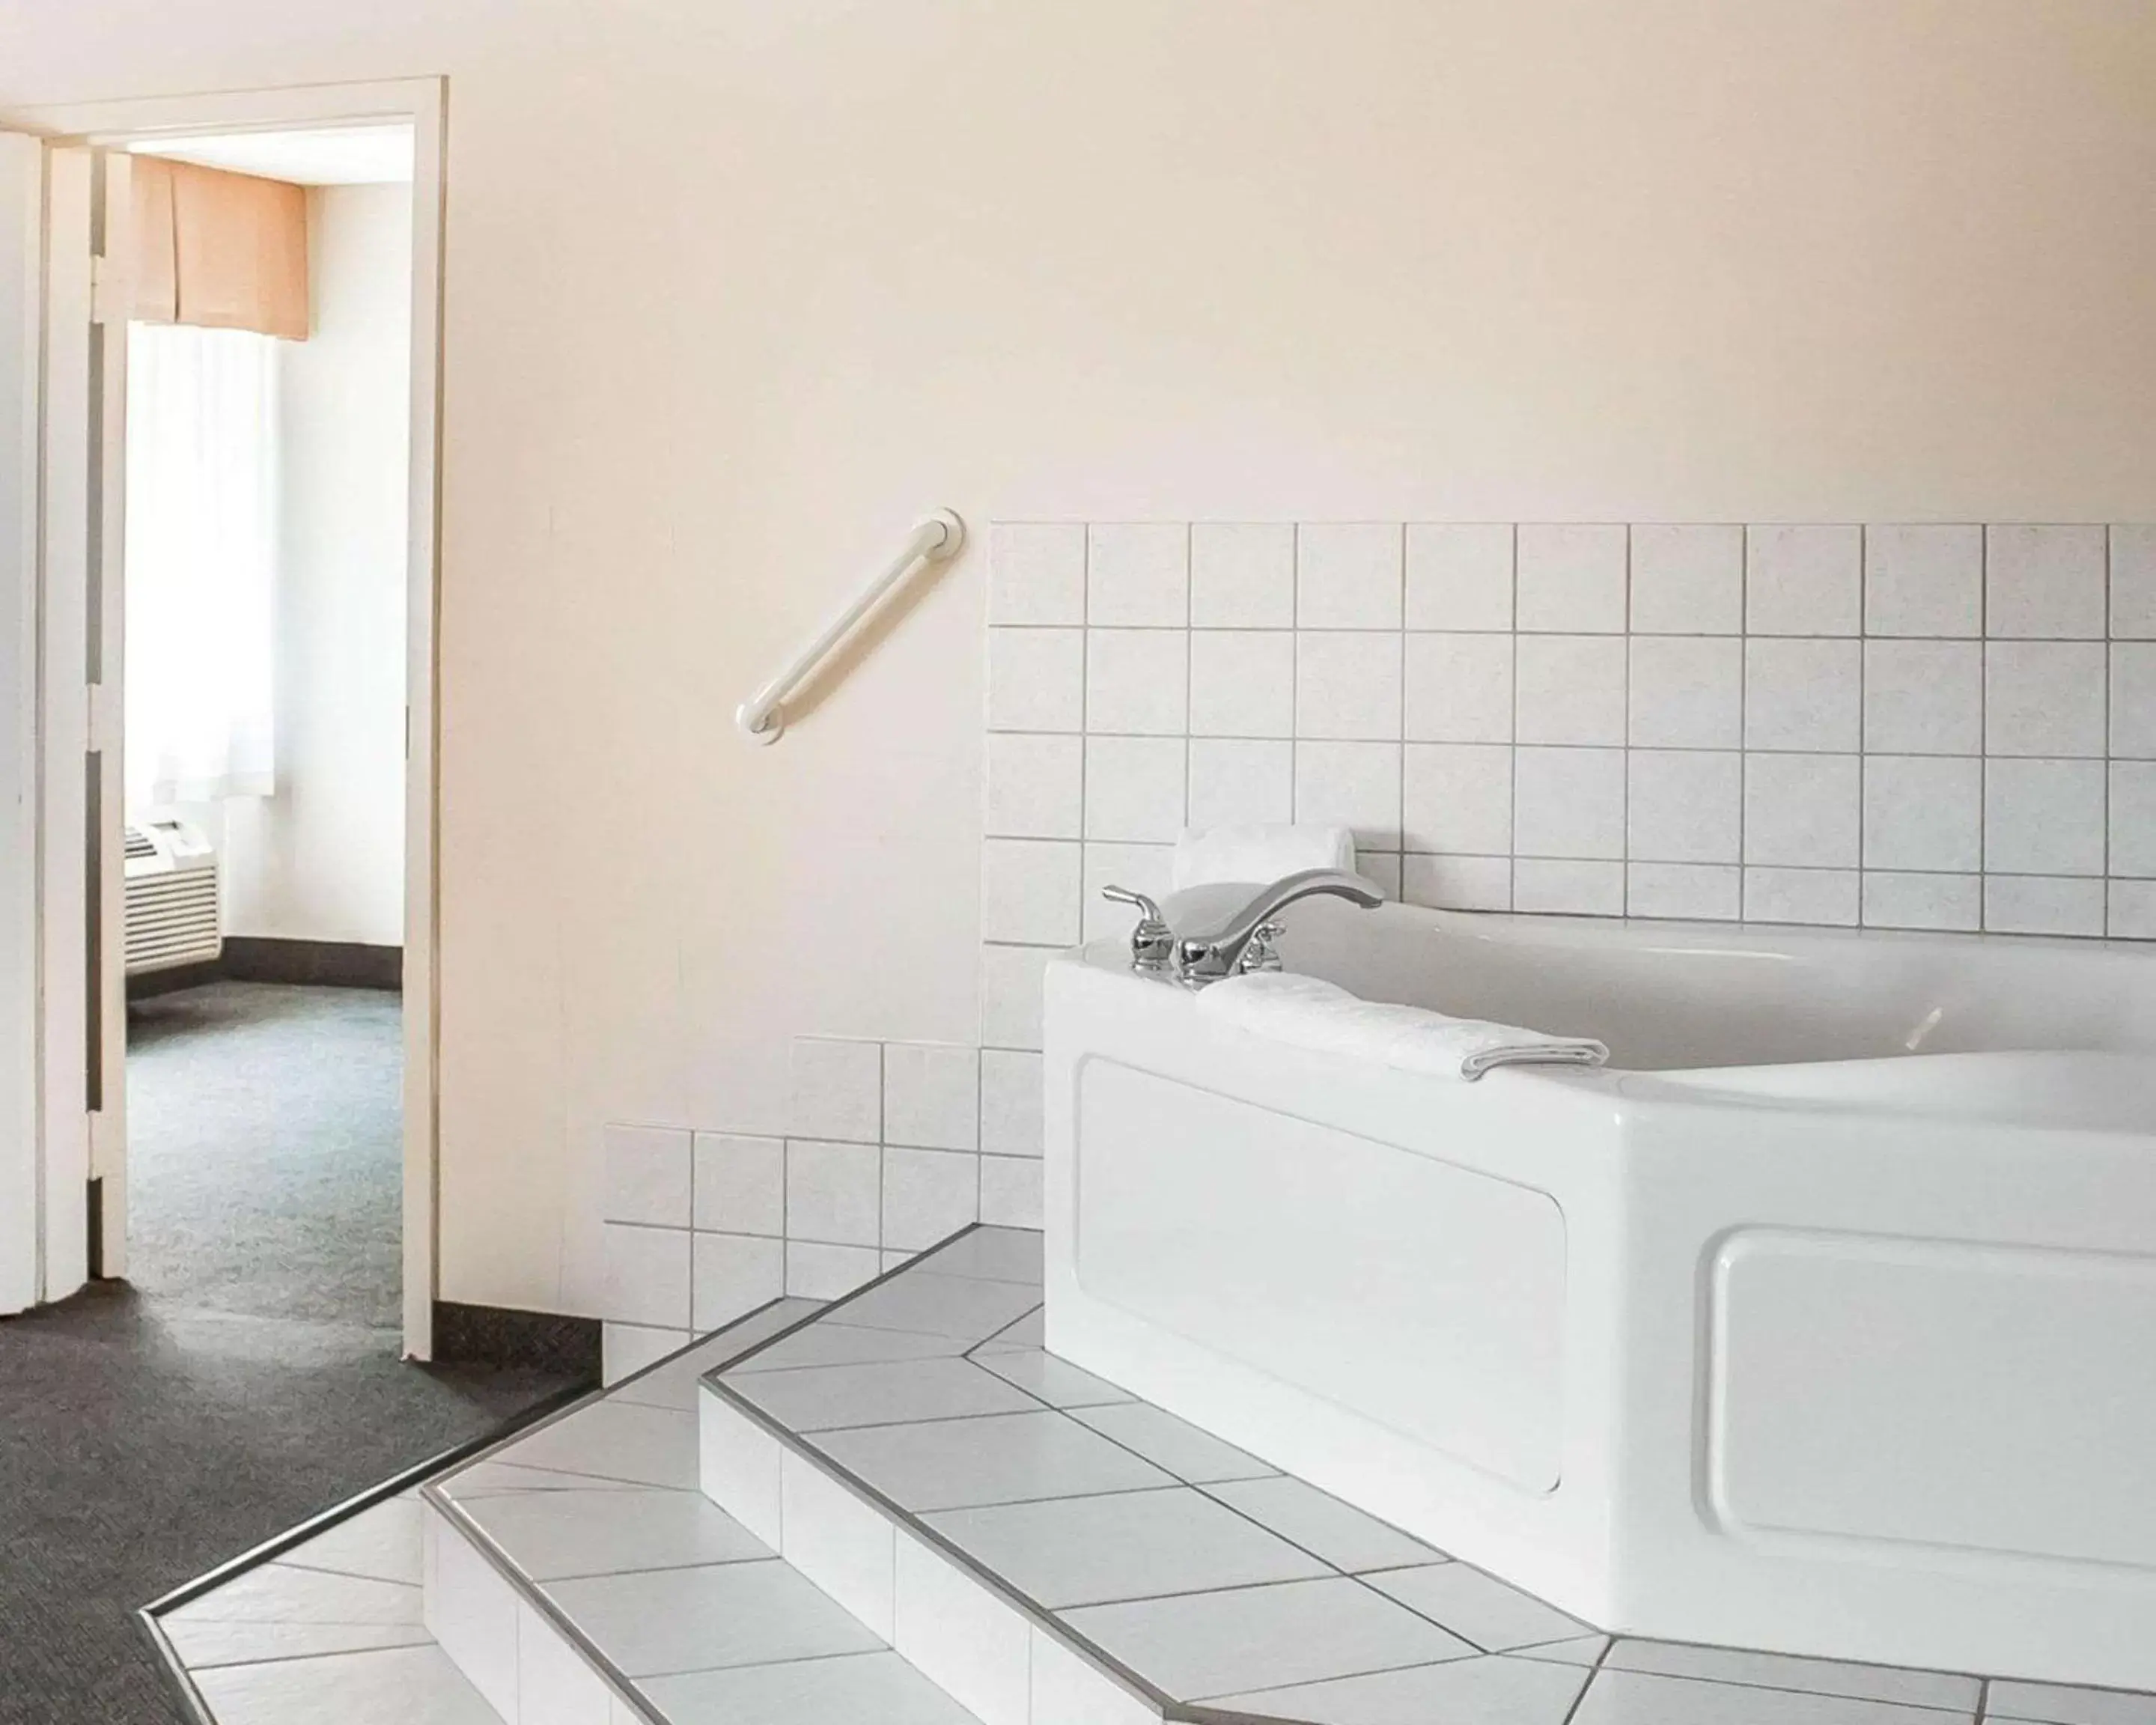 Photo of the whole room, Bathroom in Quality Inn Rhinelander